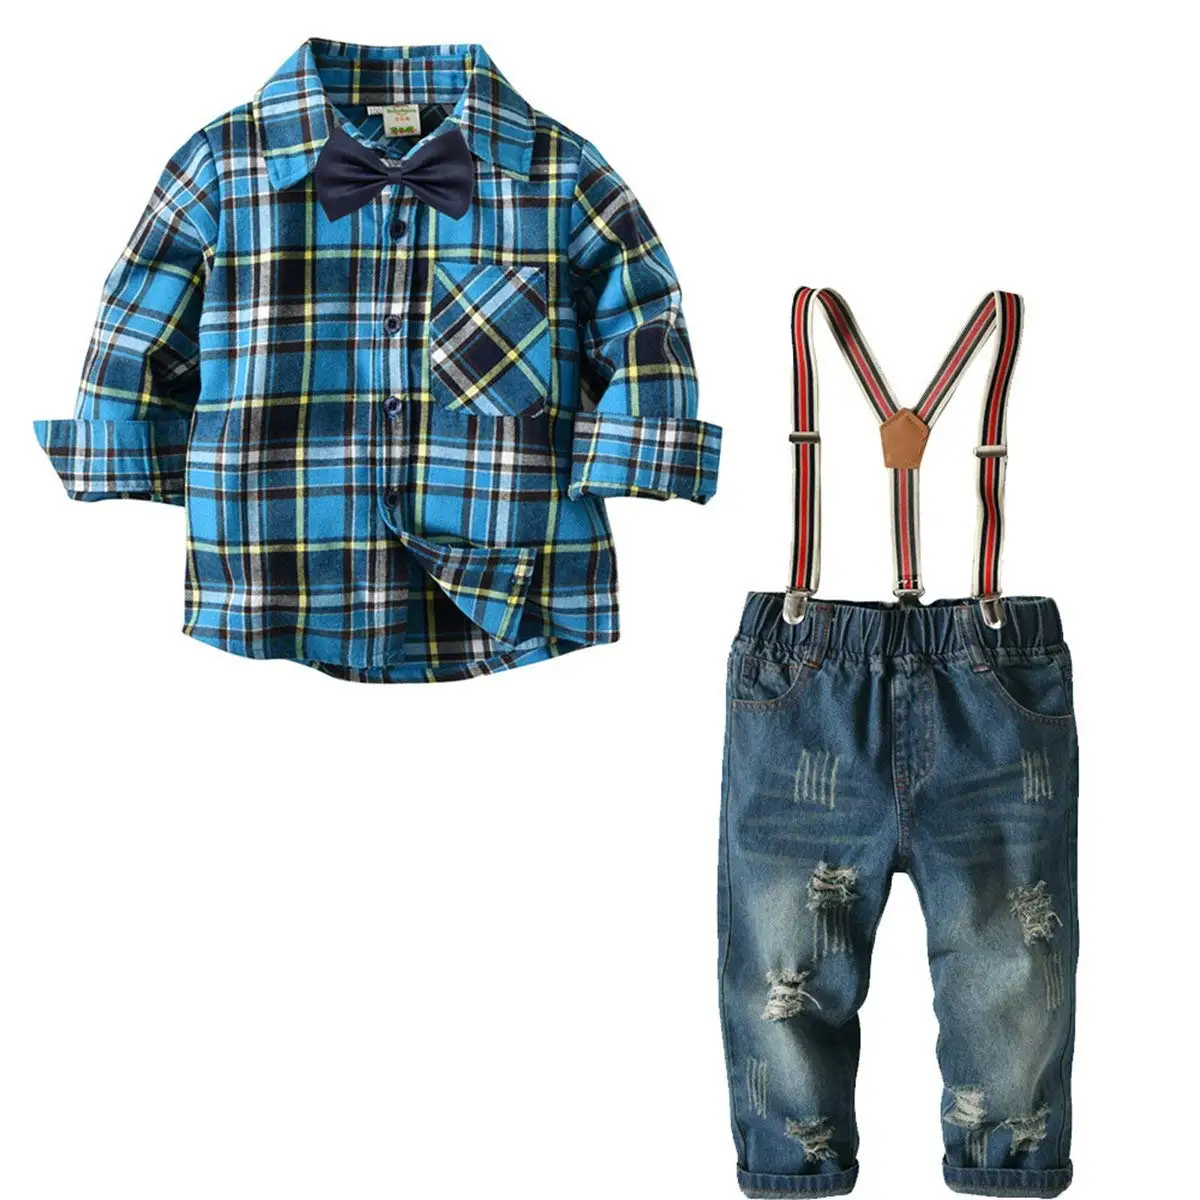 ALLAIBB Baby Toddler Boy Gentleman Outfit Dress Shirt+Suspender Plaid Pants 2Pcs Set